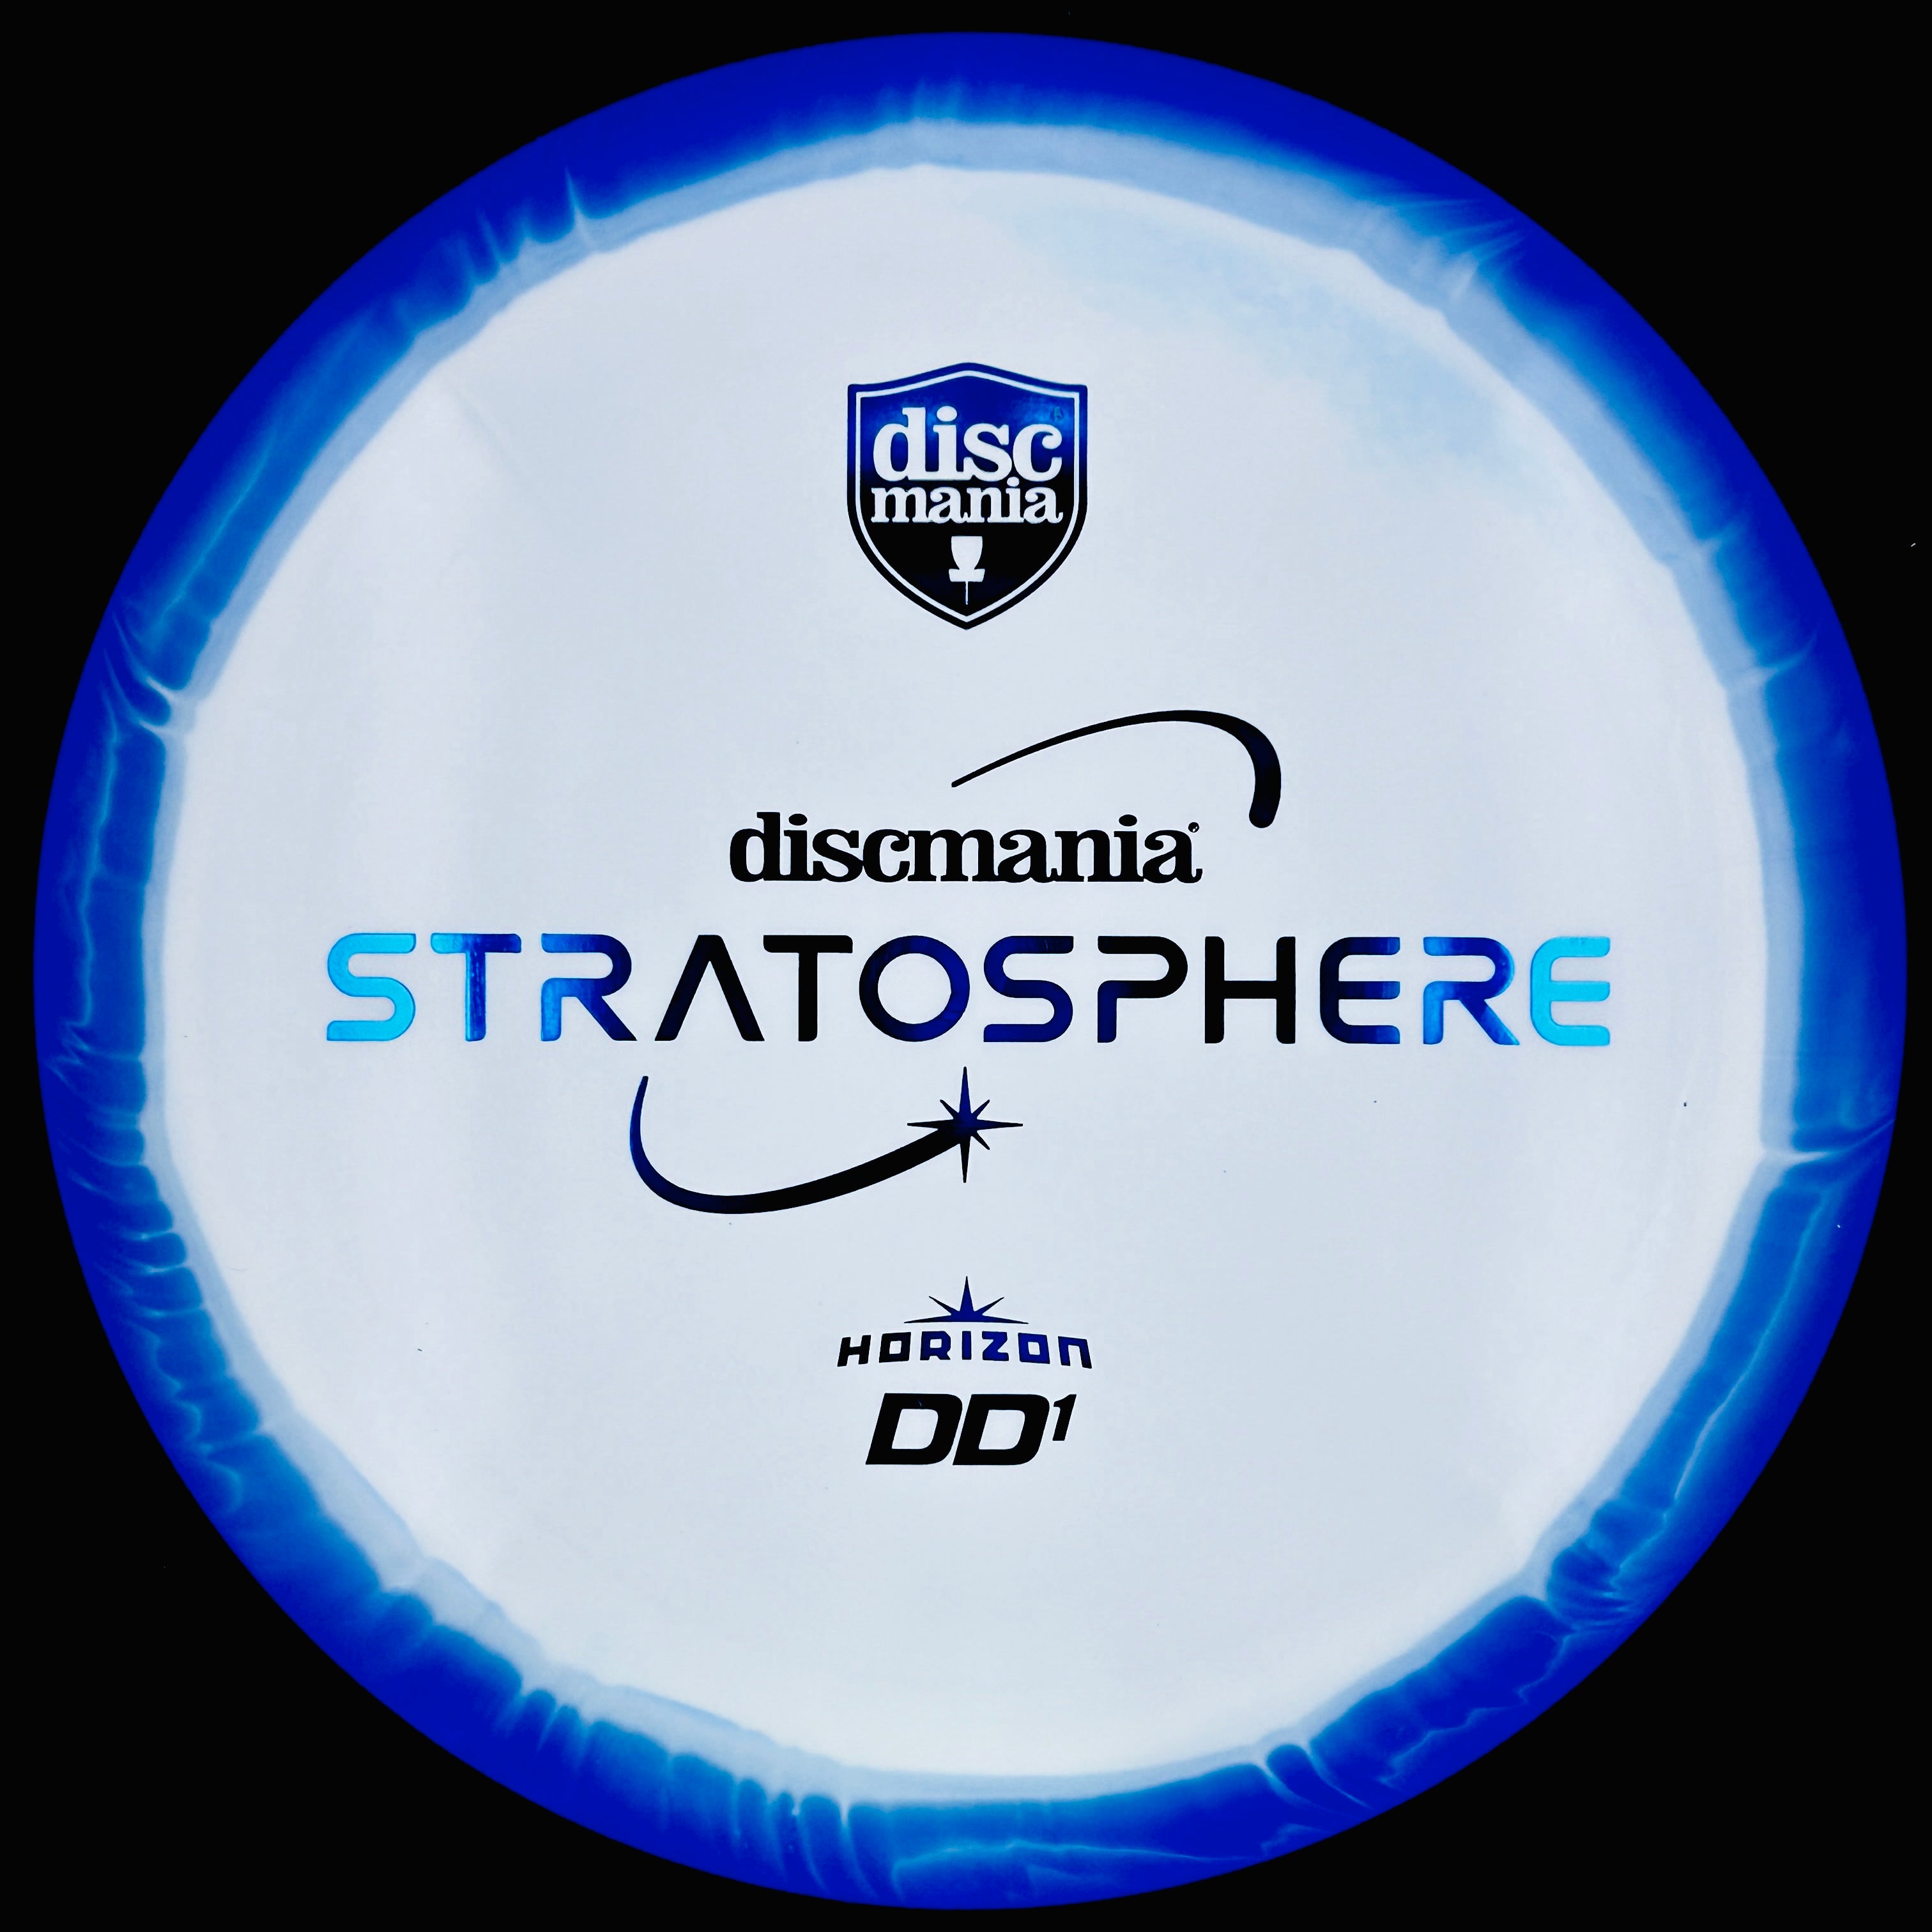 Discmania Stratosphere Horizon DD1 (Mystery Box)